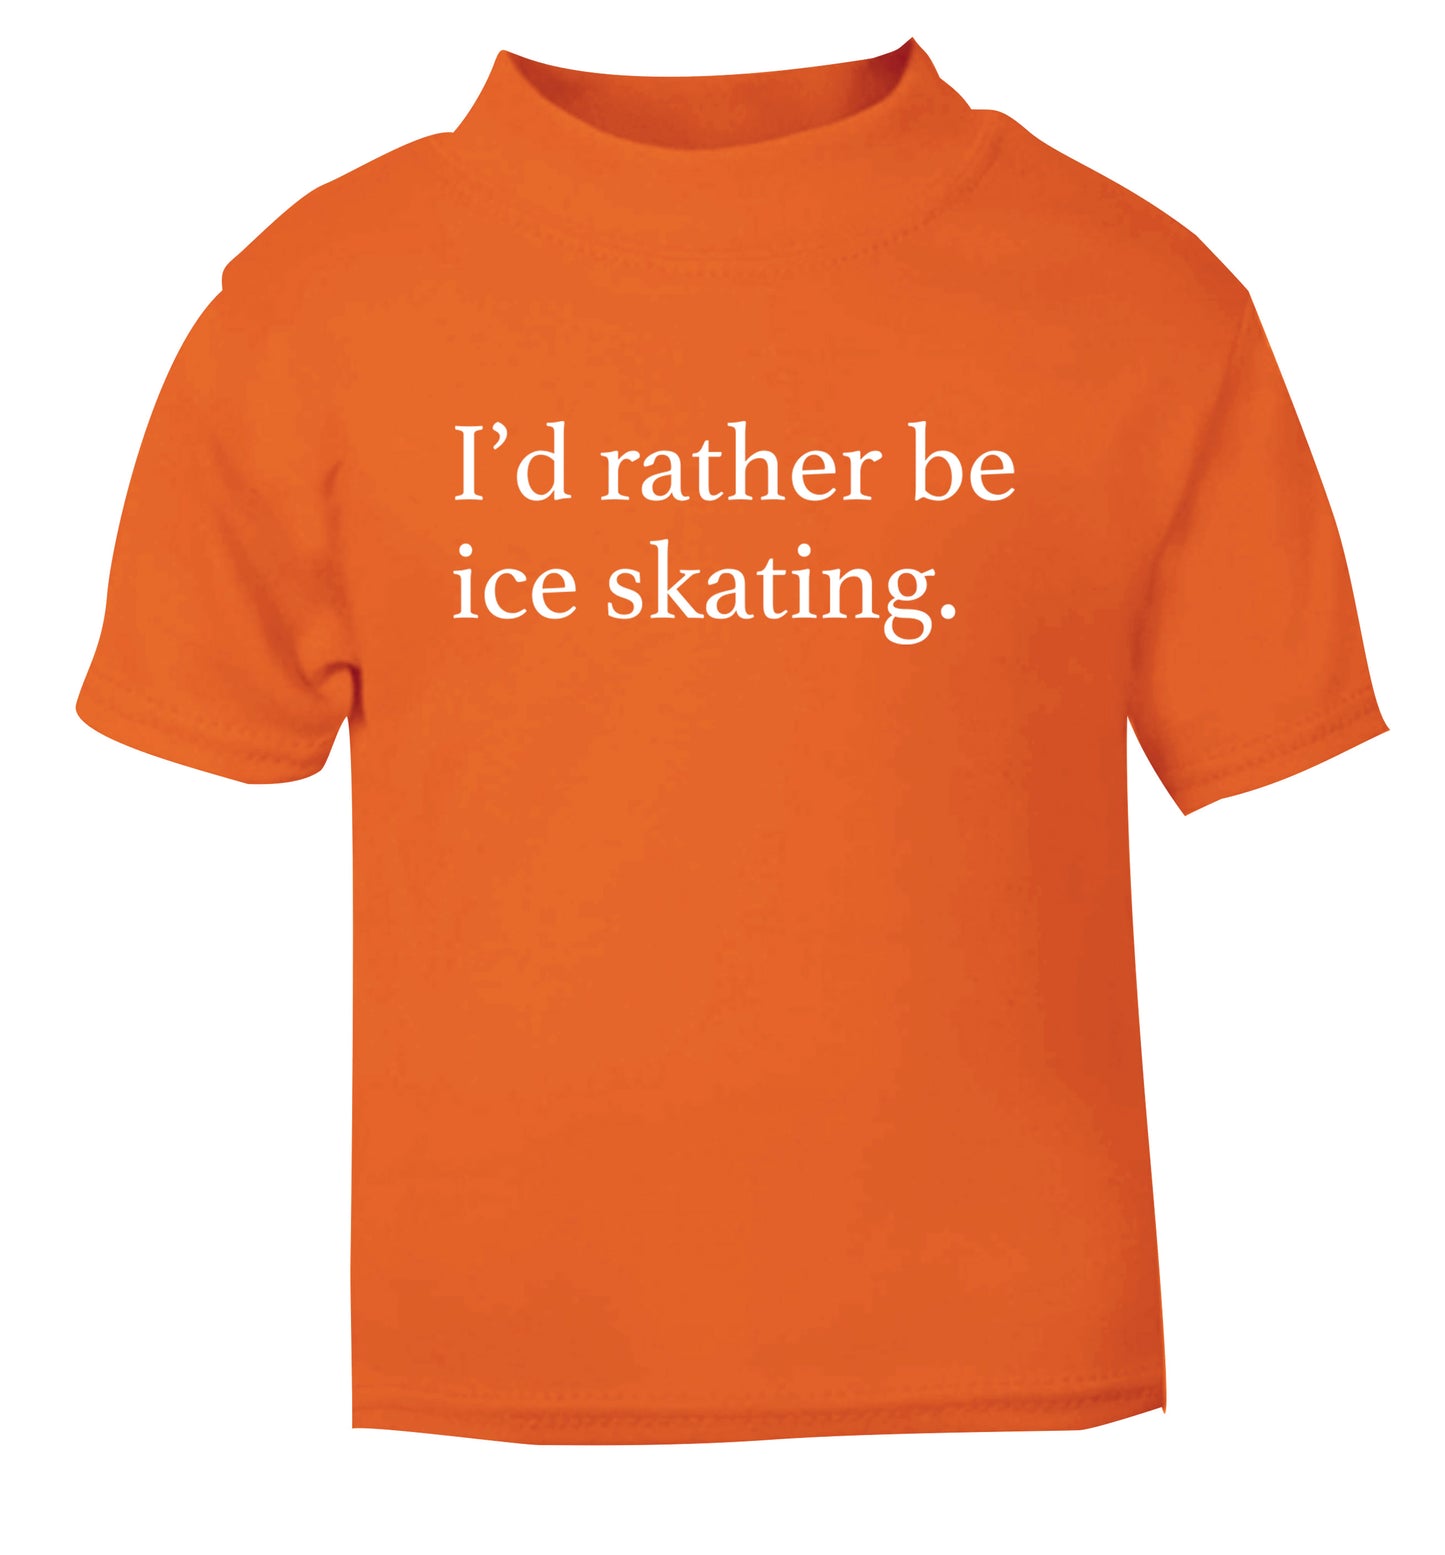 I'd rather be ice skating orange Baby Toddler Tshirt 2 Years